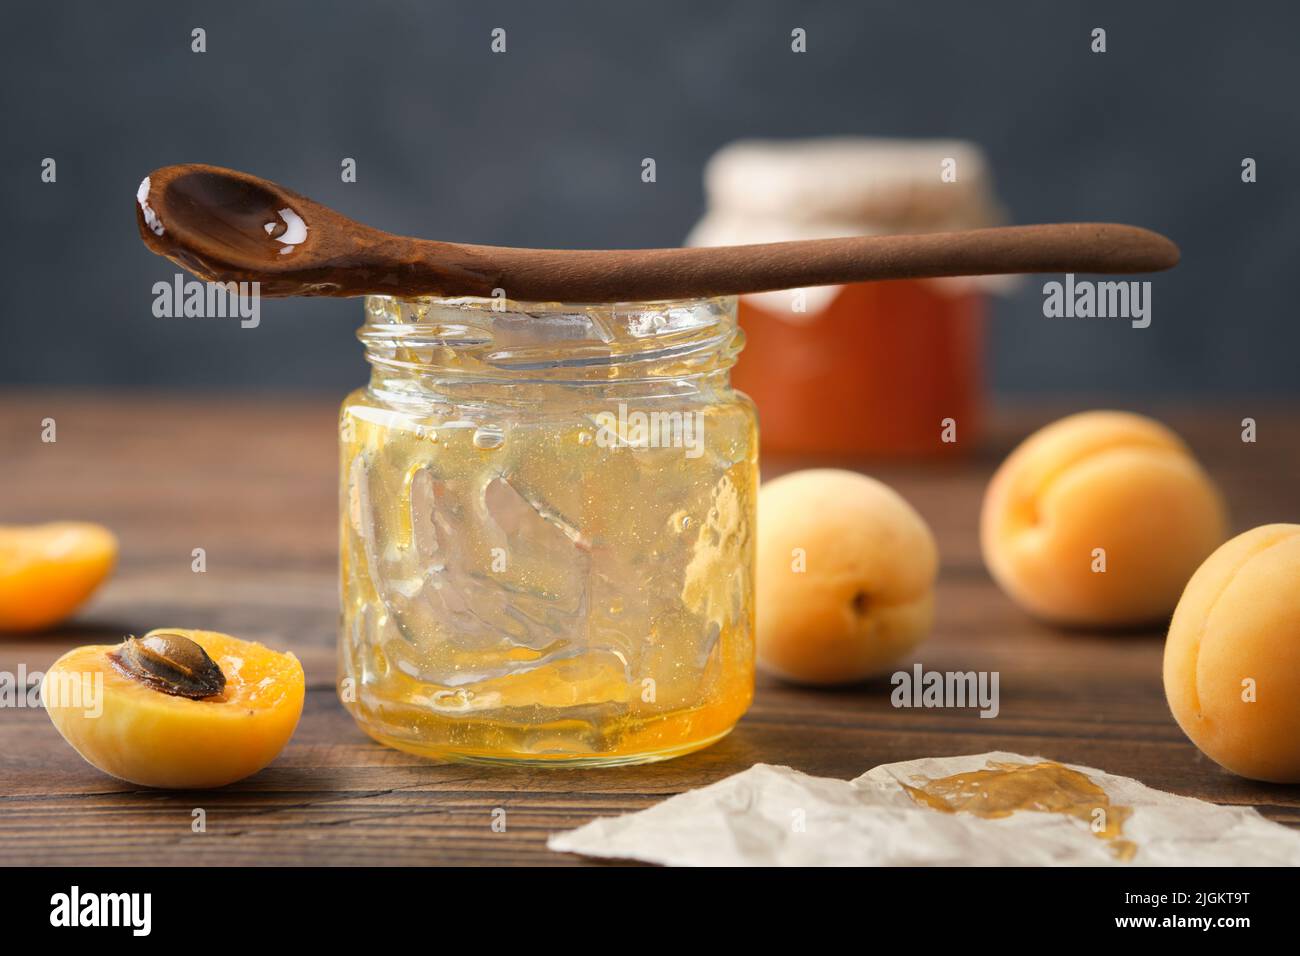 Empty jar of eaten apricot jam. Empty glass jar of homemade apricot jam, spoon and ripe apricot fruits on kitchen table. Stock Photo